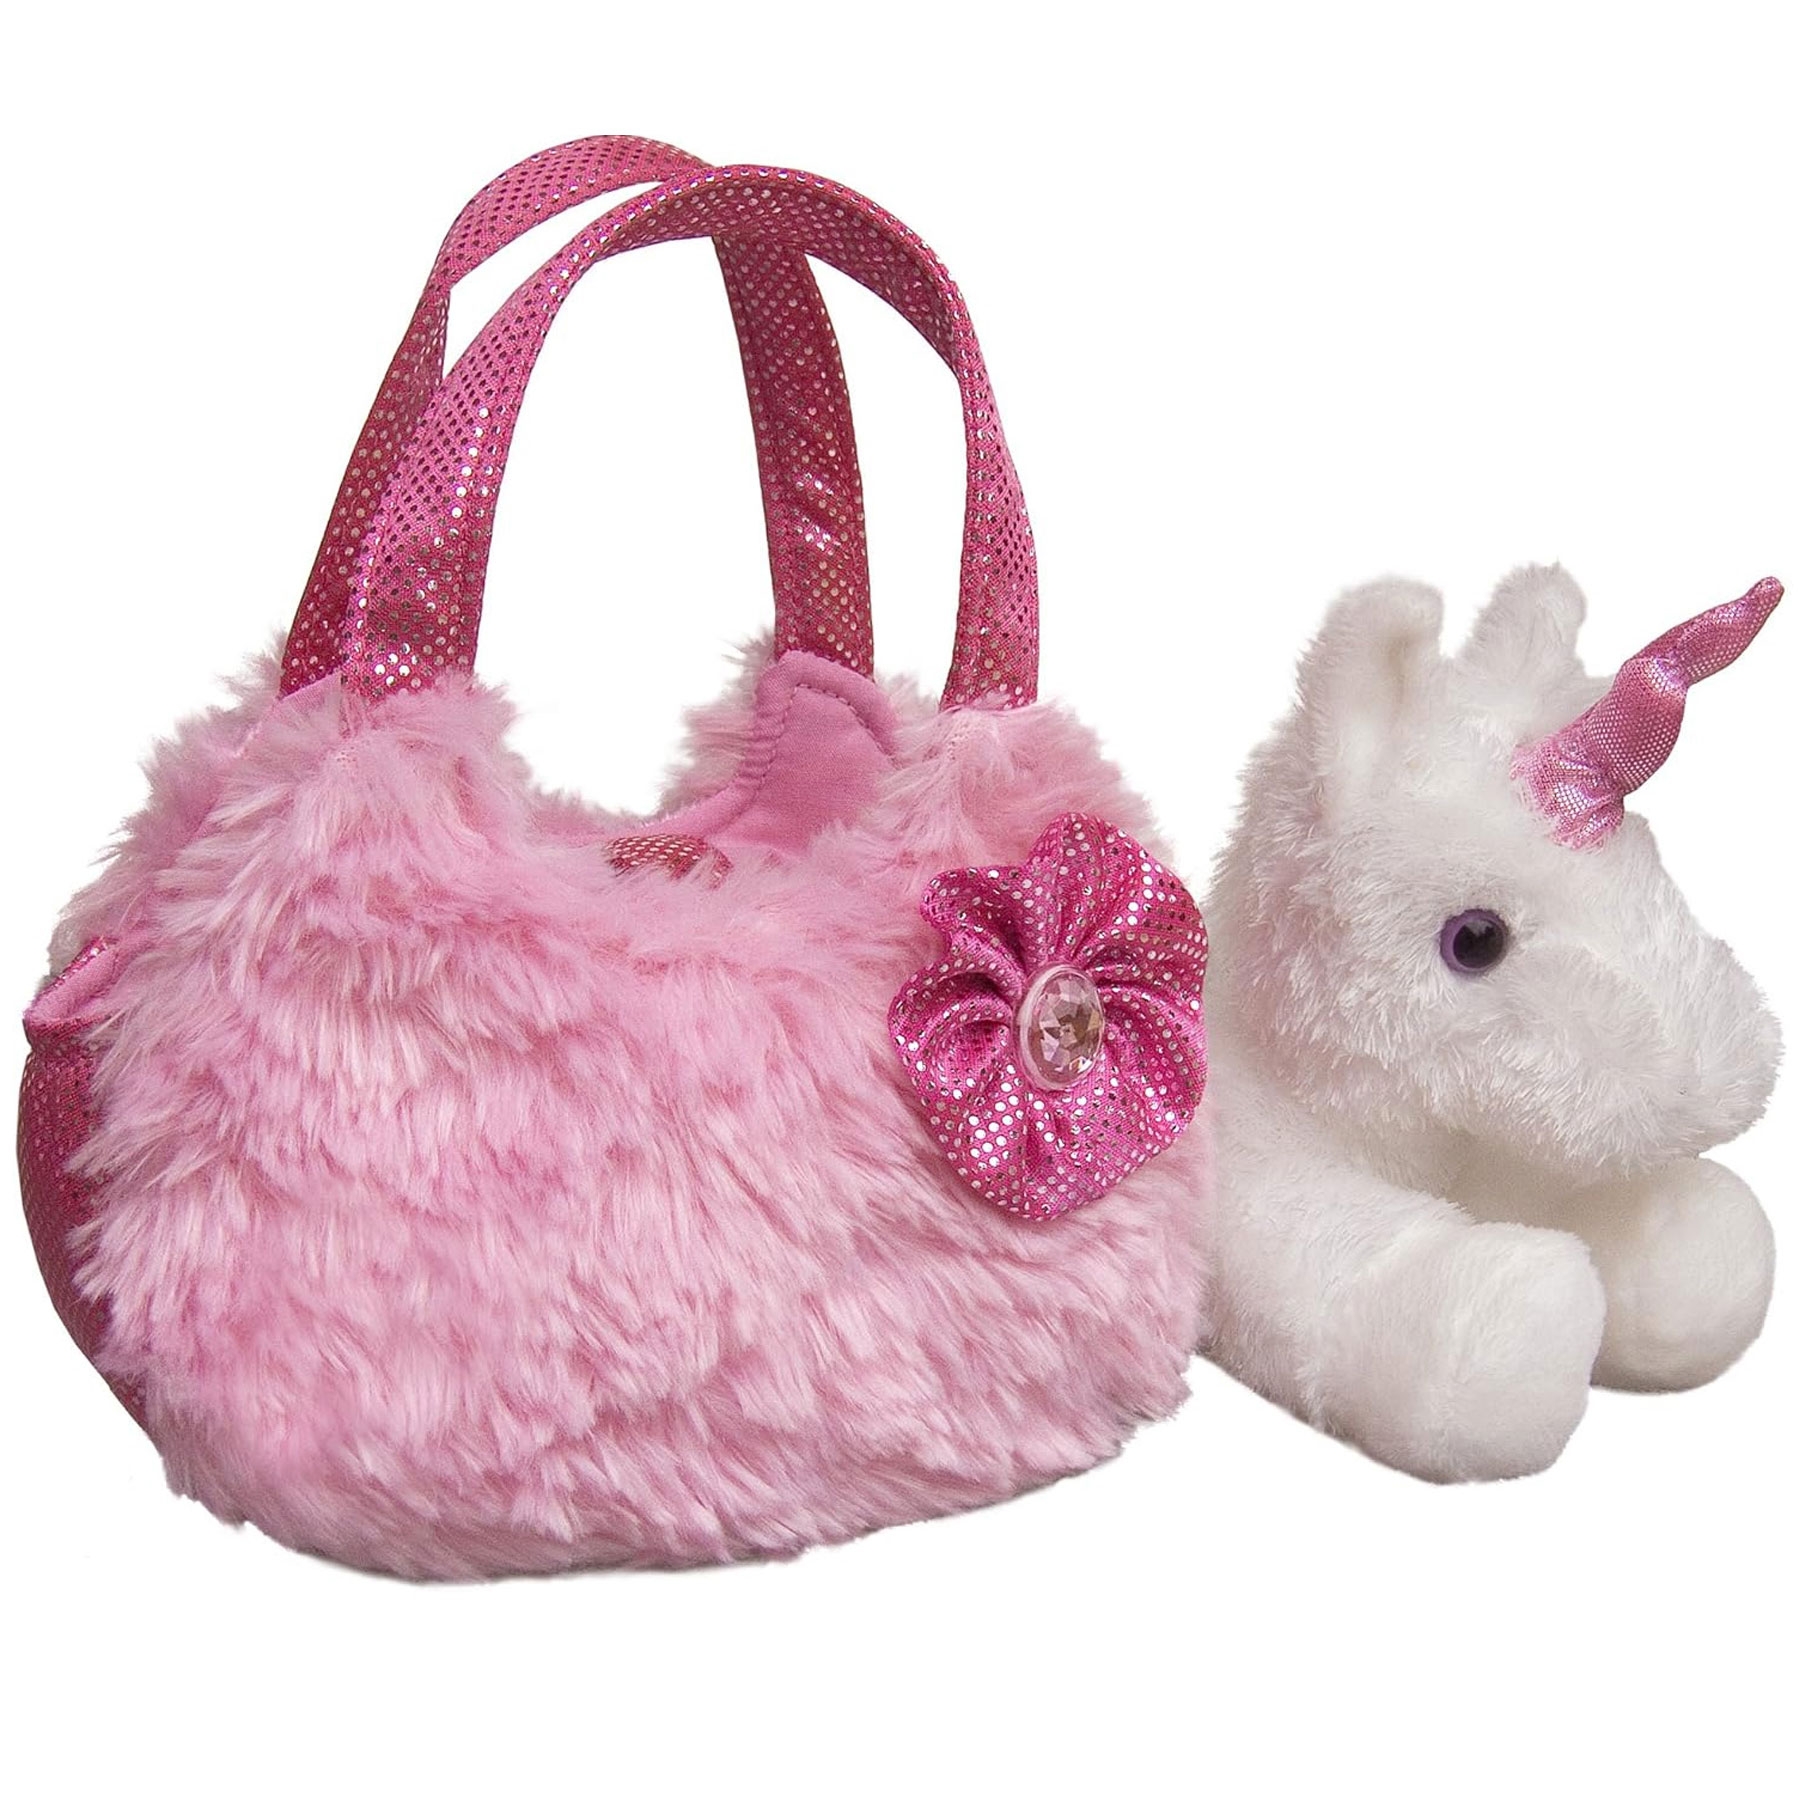 Toby Enterprises Girls Multicolor Plush Stuffed Animal Unicorn Purse 9